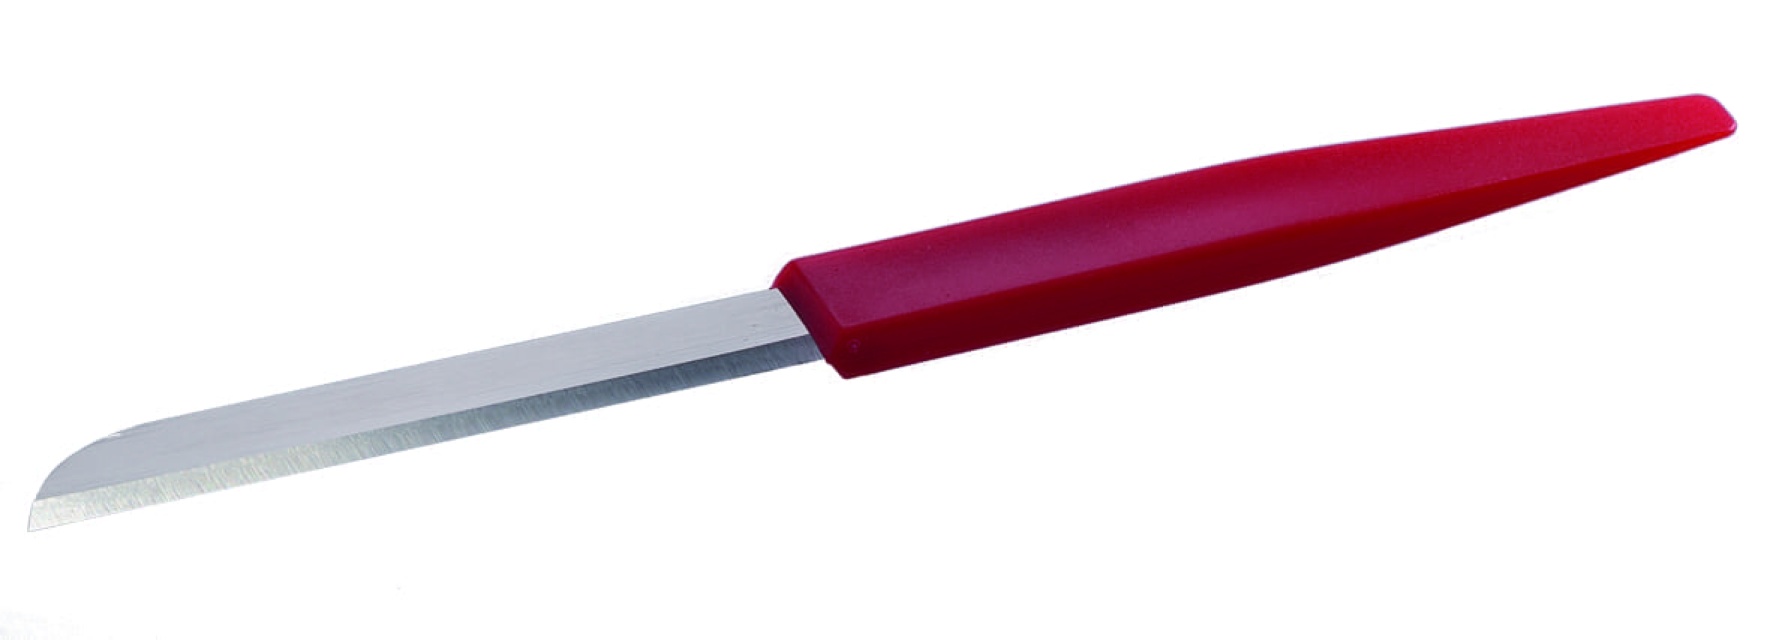 Dejkniv / udskærekniv, forskellige størrelser - Martellato